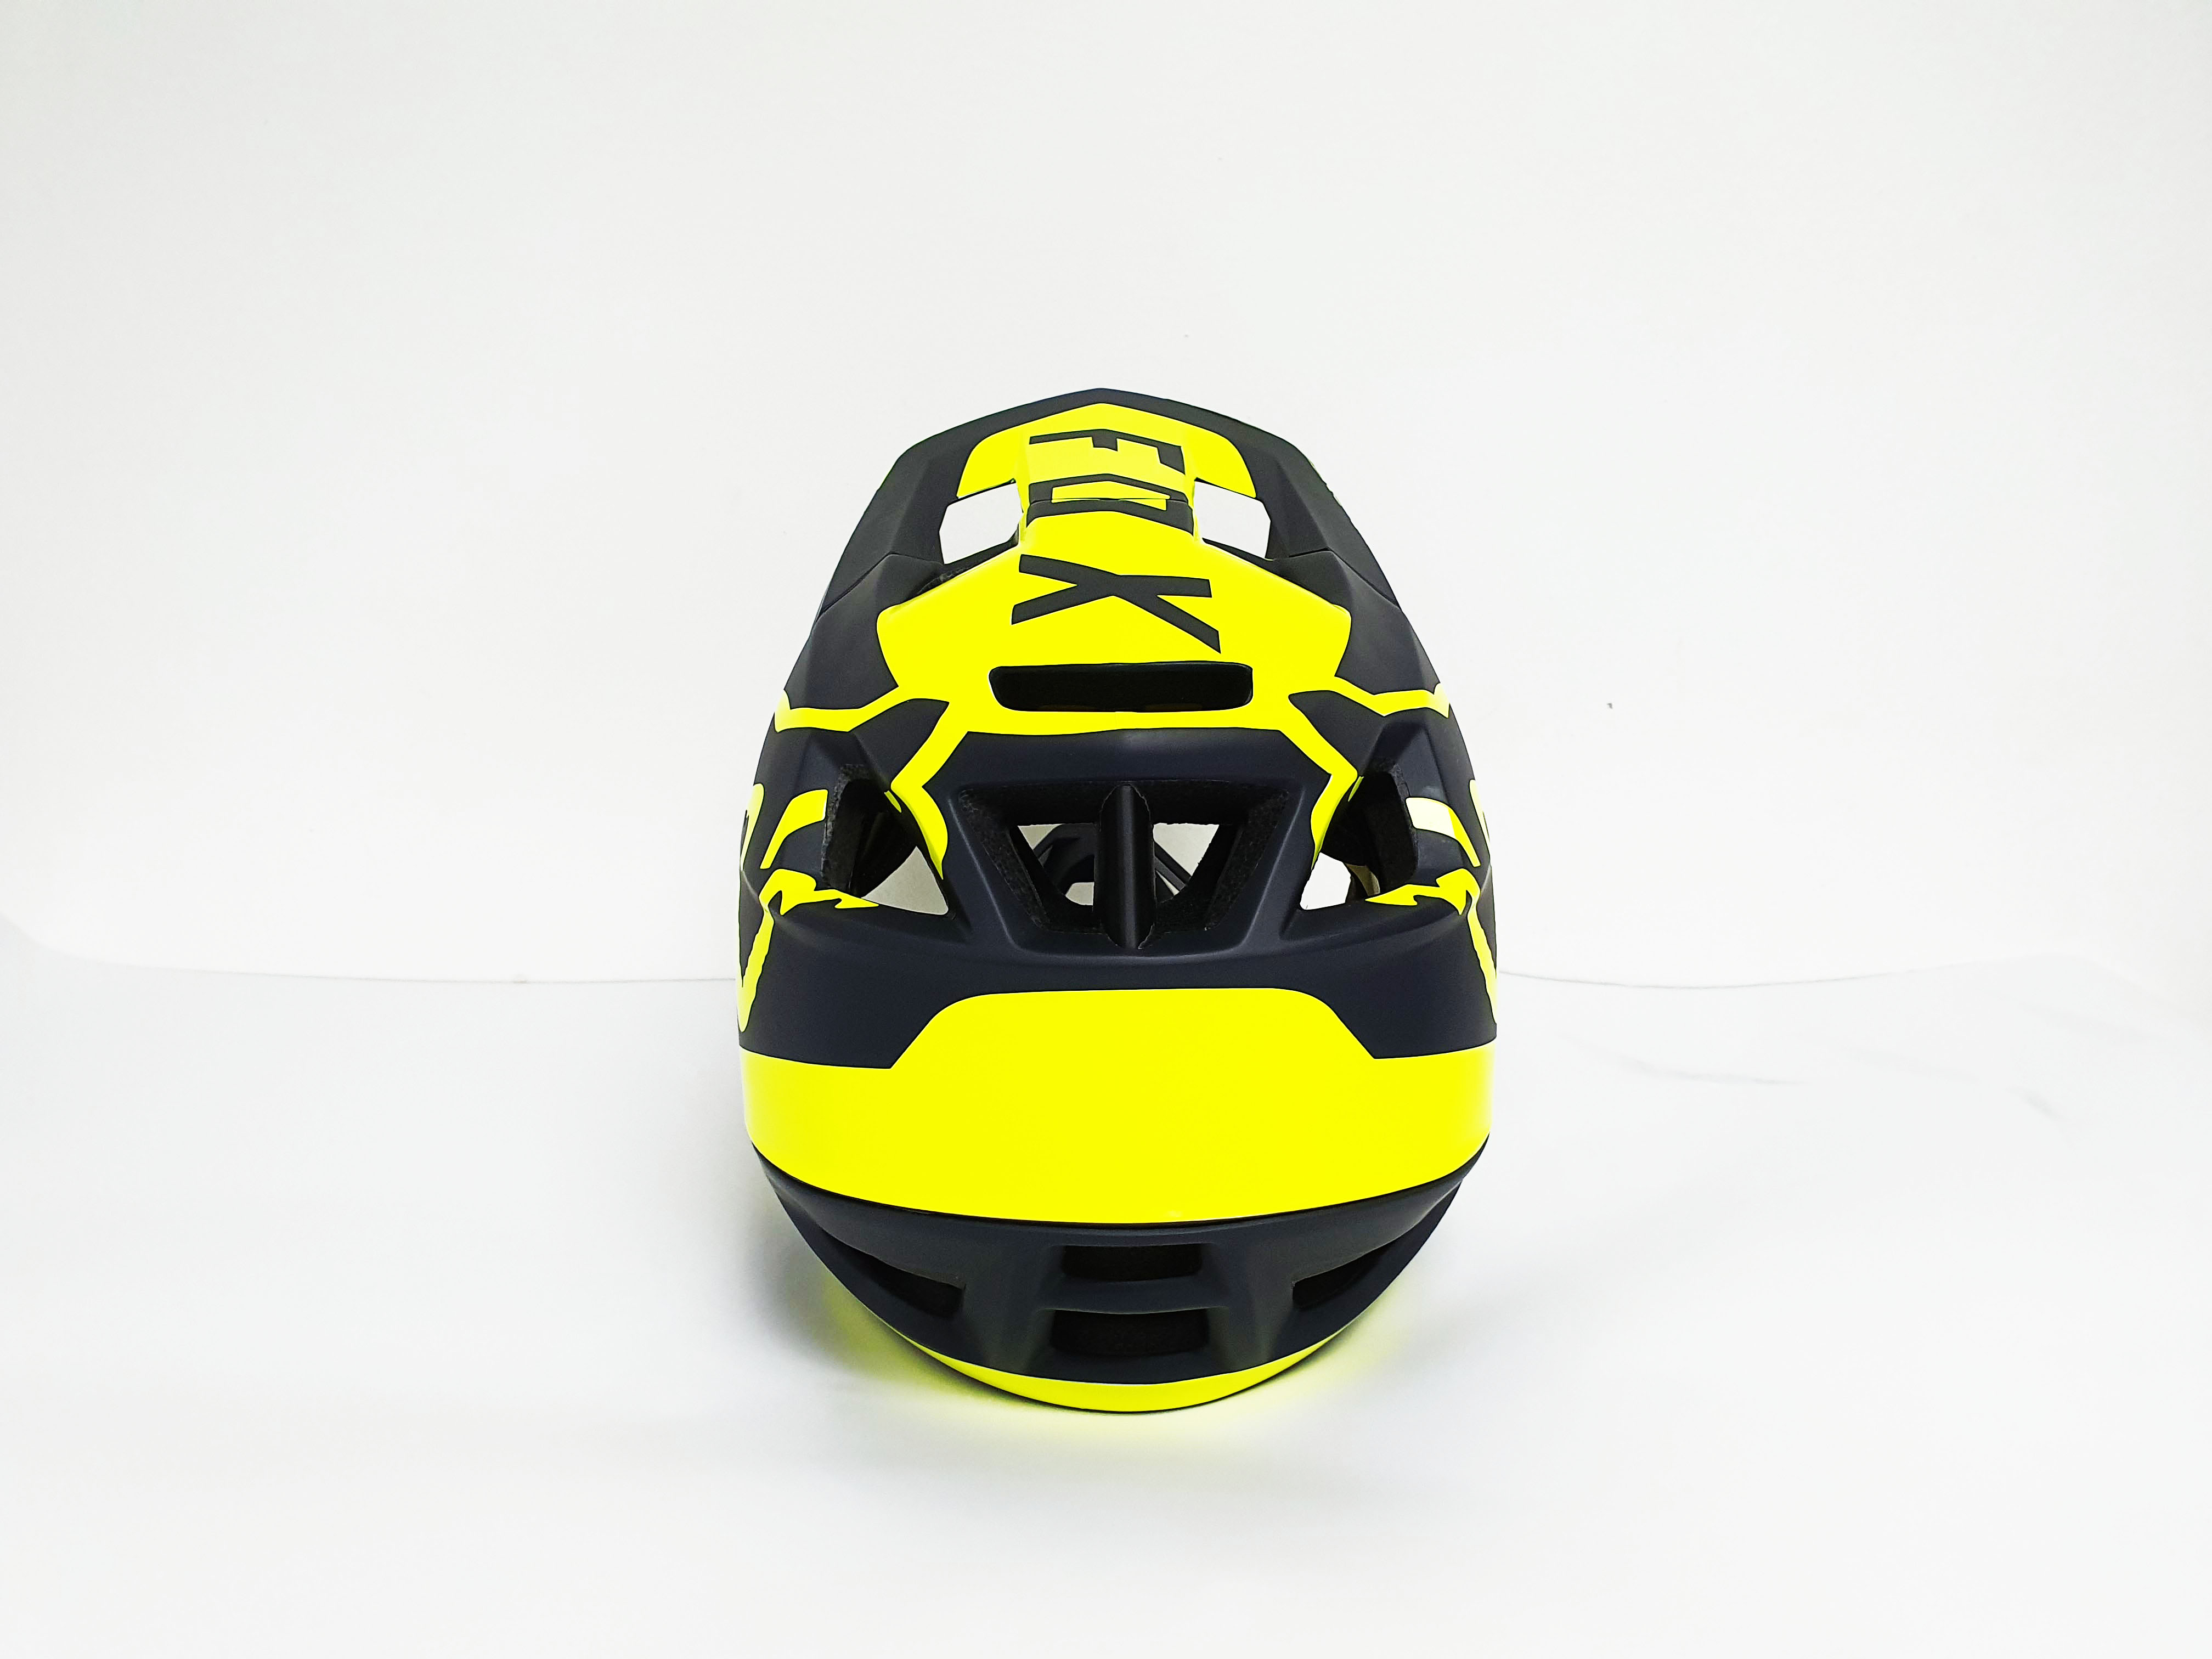 Suzuki B-King for Fox Helmet in Bright Yellow and Black